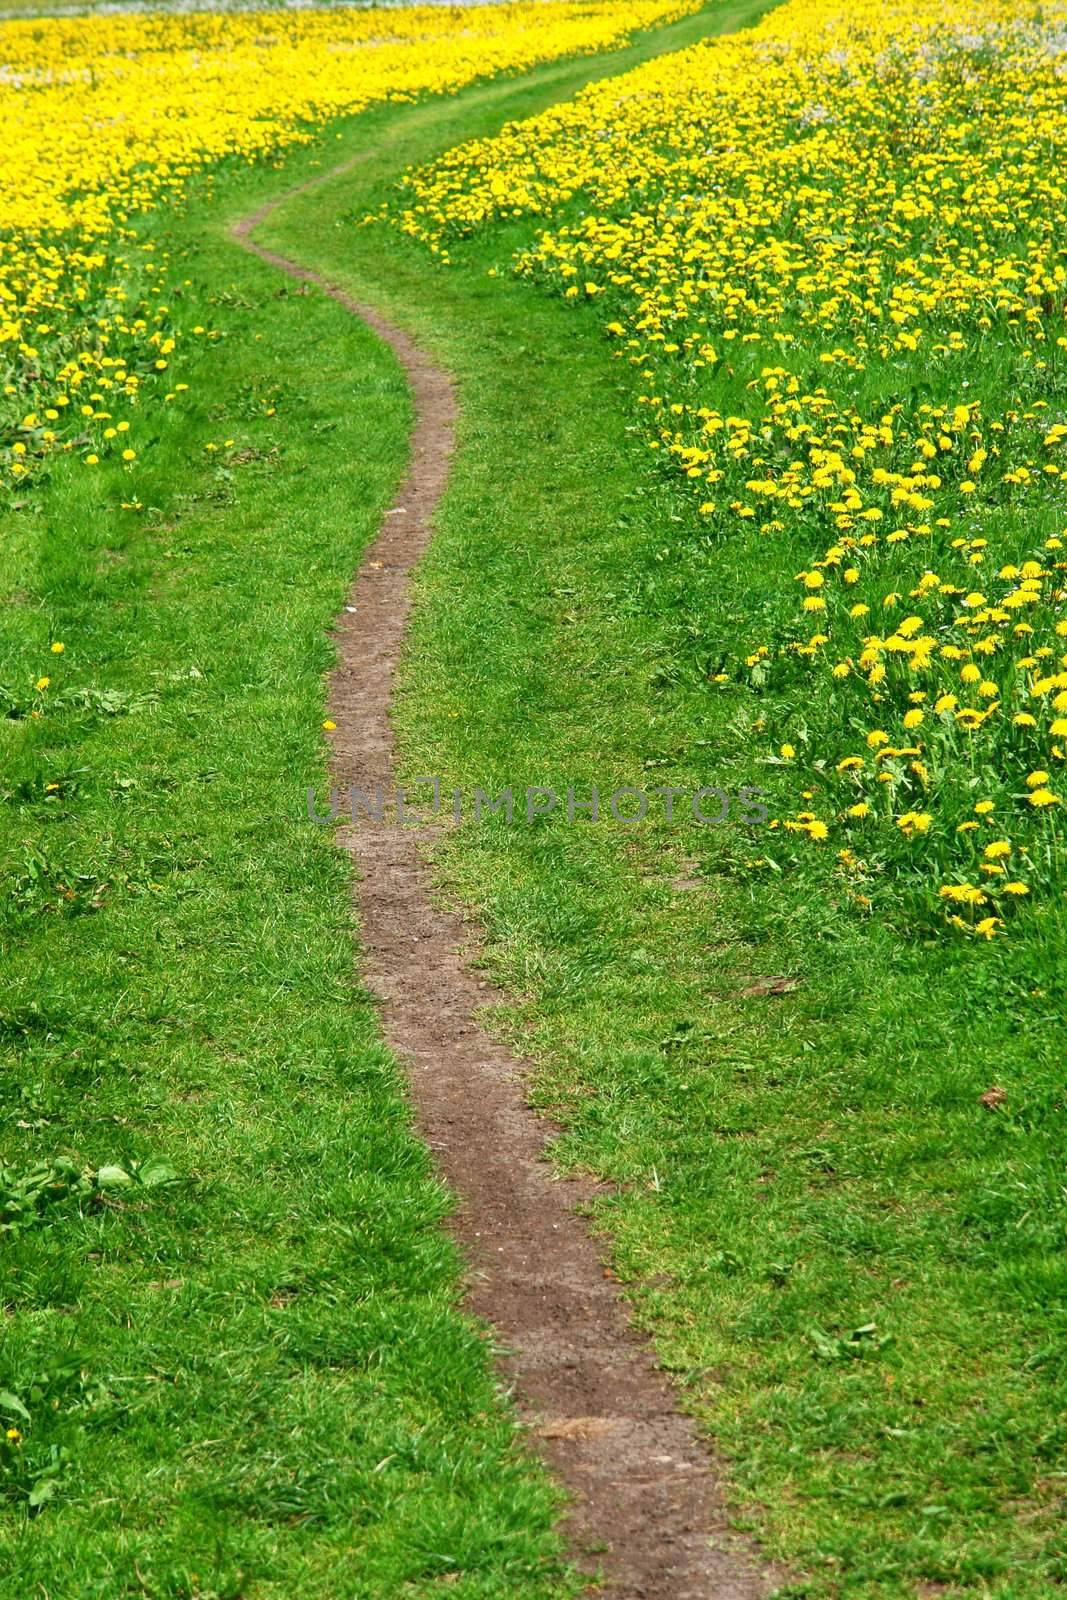 a path through a summer landscape on a sunny day